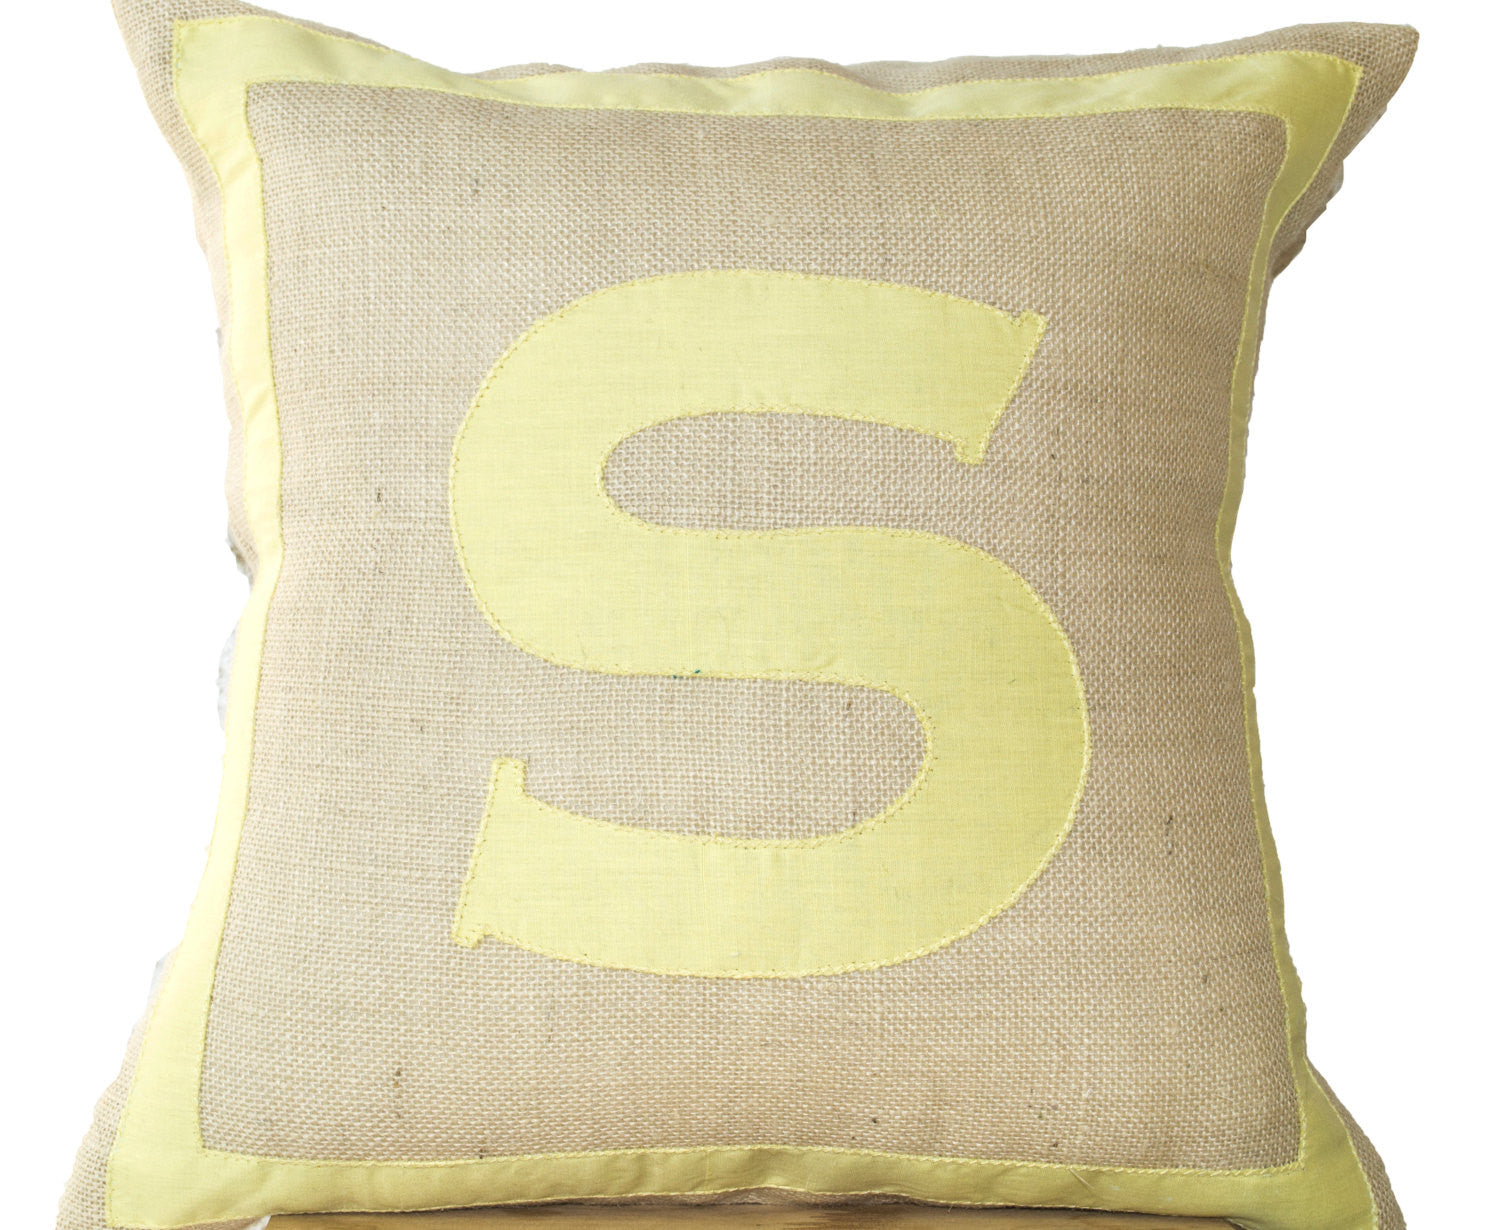 Handmade monogrammed yellow cotton throw pillow